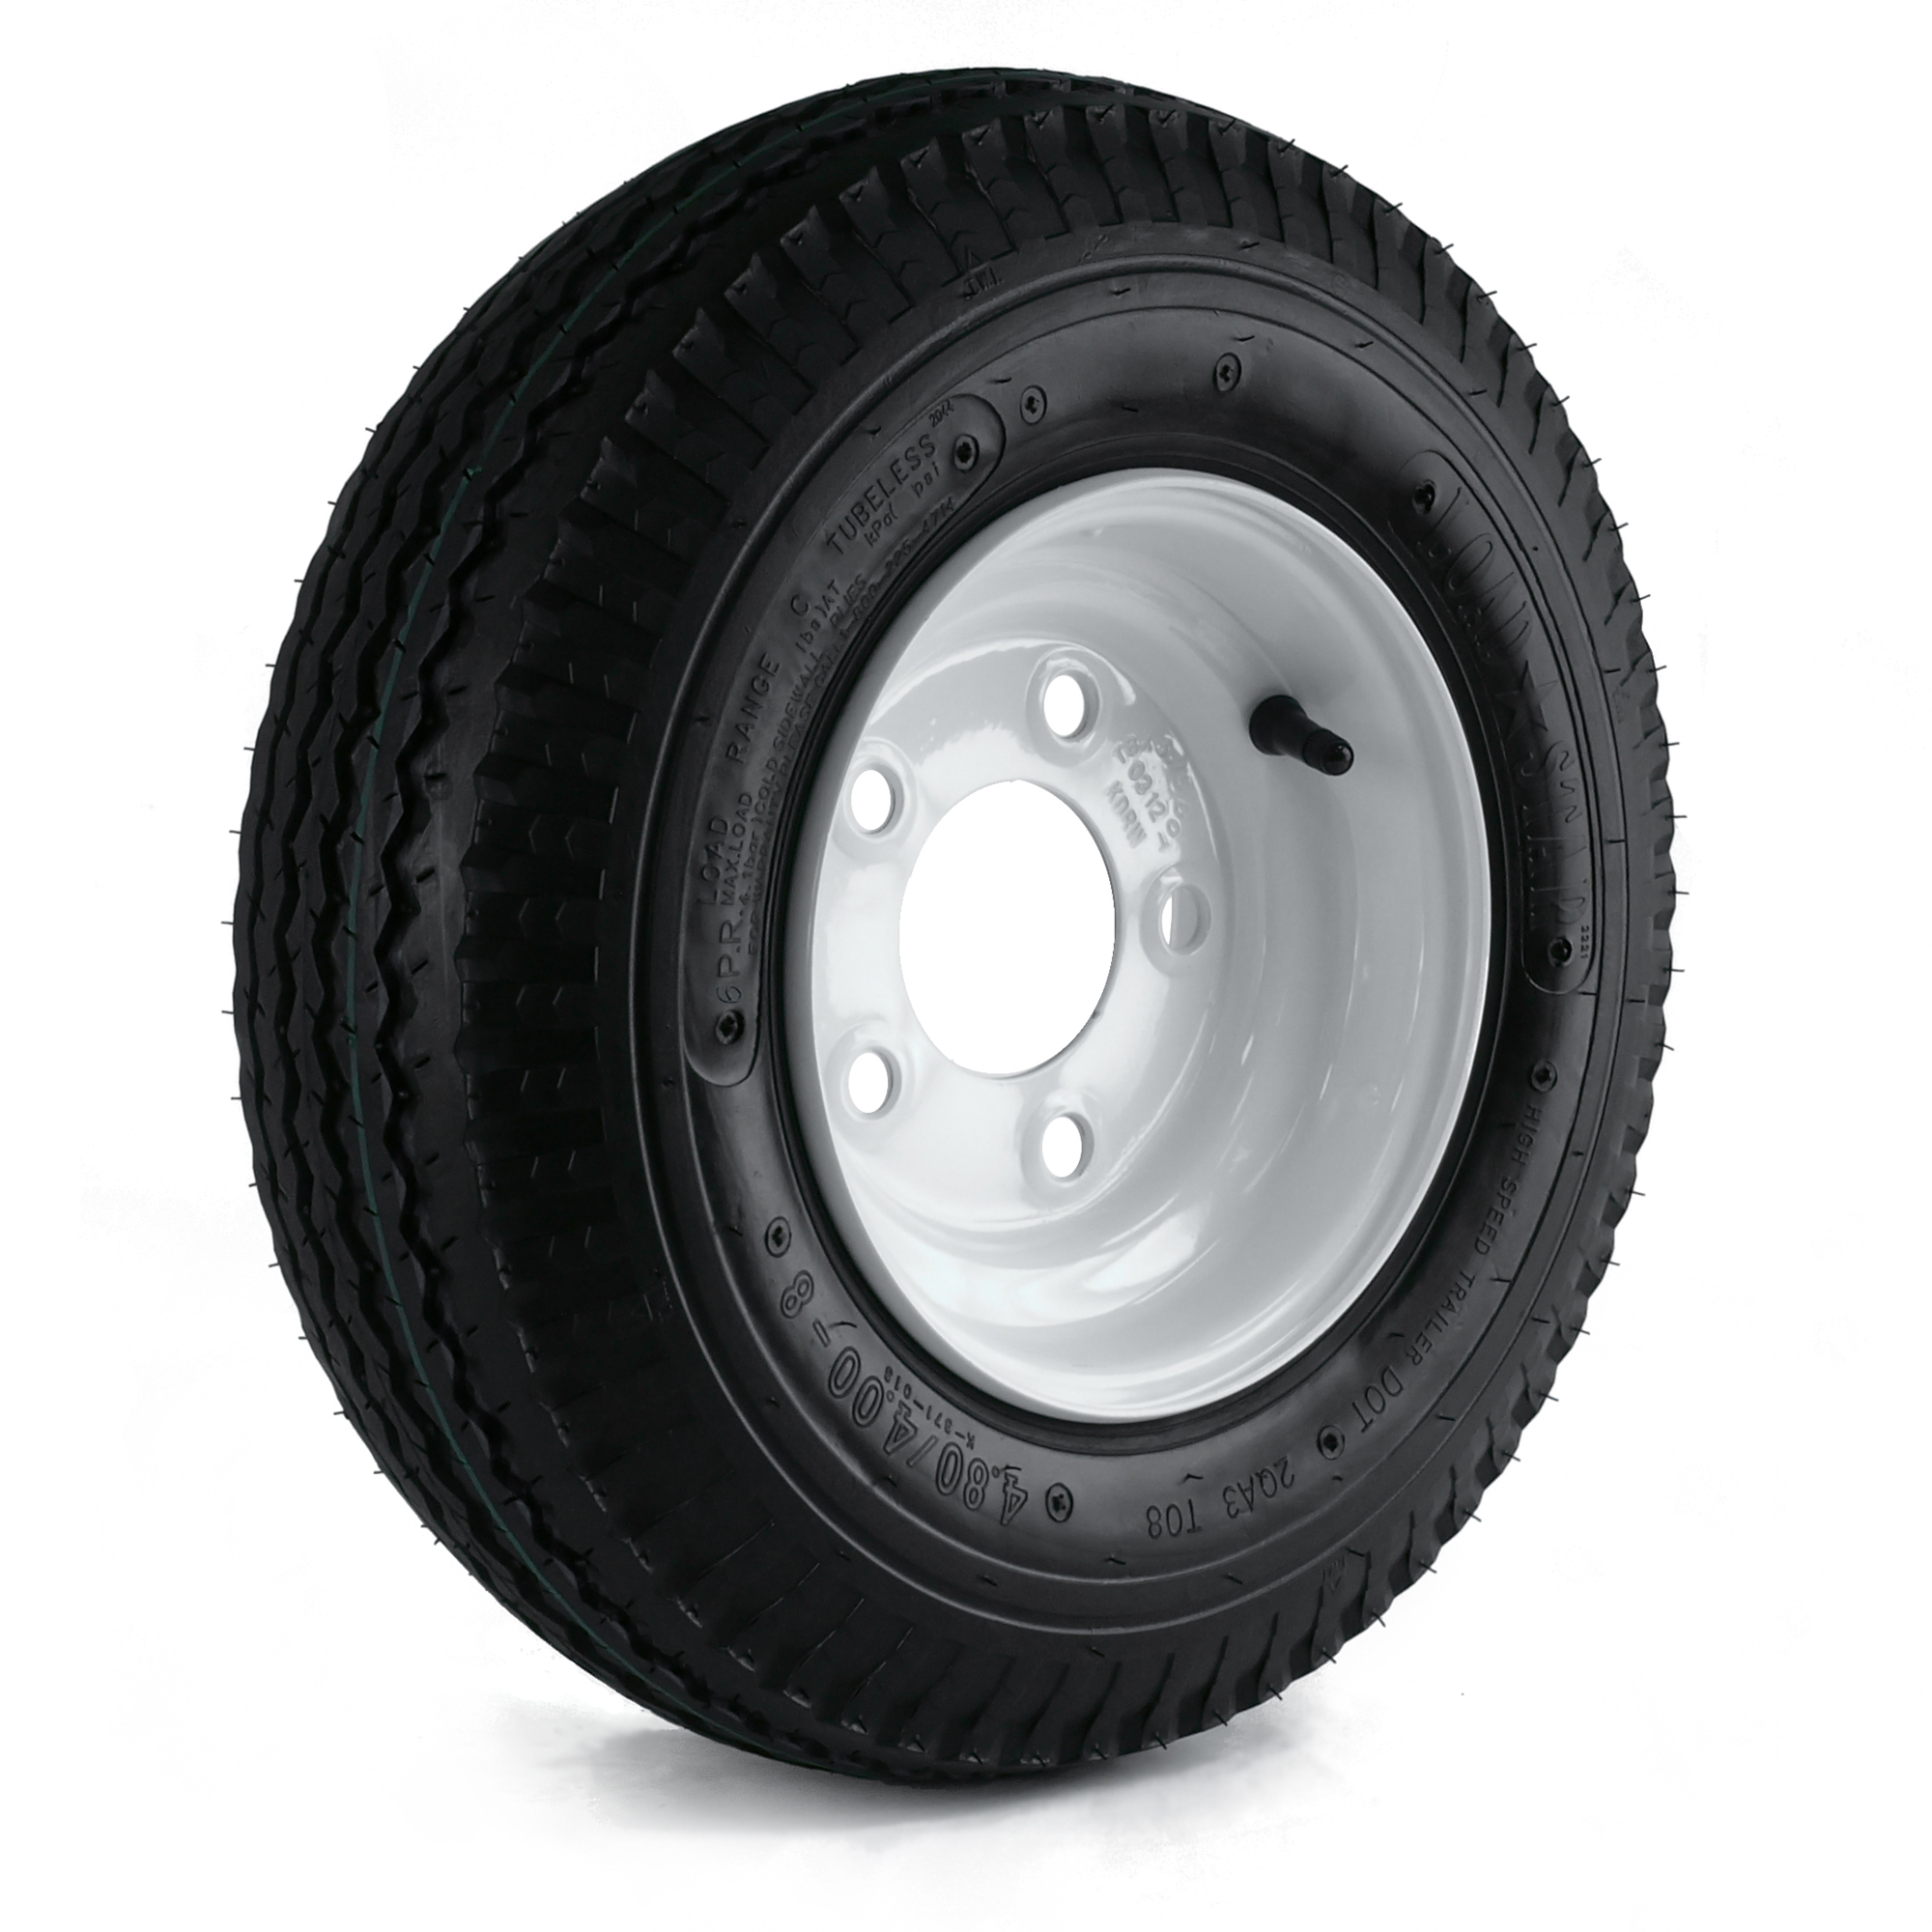 Kenda Loadstar 8Inch Bias-Ply Trailer Tire and Wheel Assembly â 16.5 x 4.80 x 8, 5-Hole, Load Range C, Model DM408C-5IN